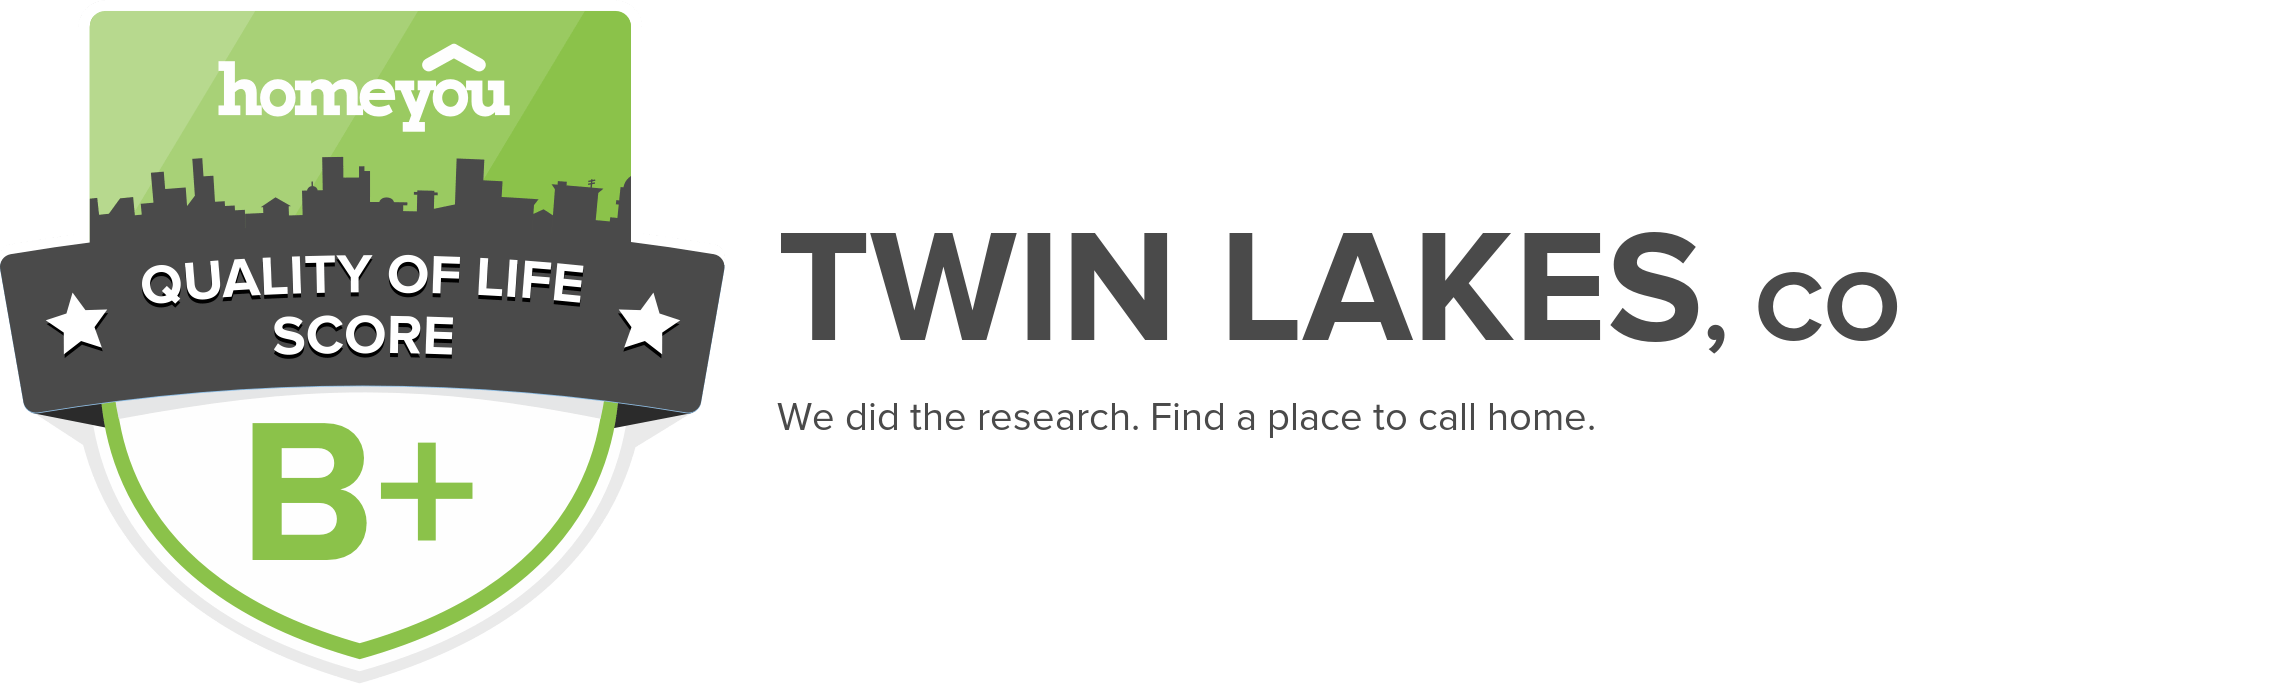 Twin Lakes, CO